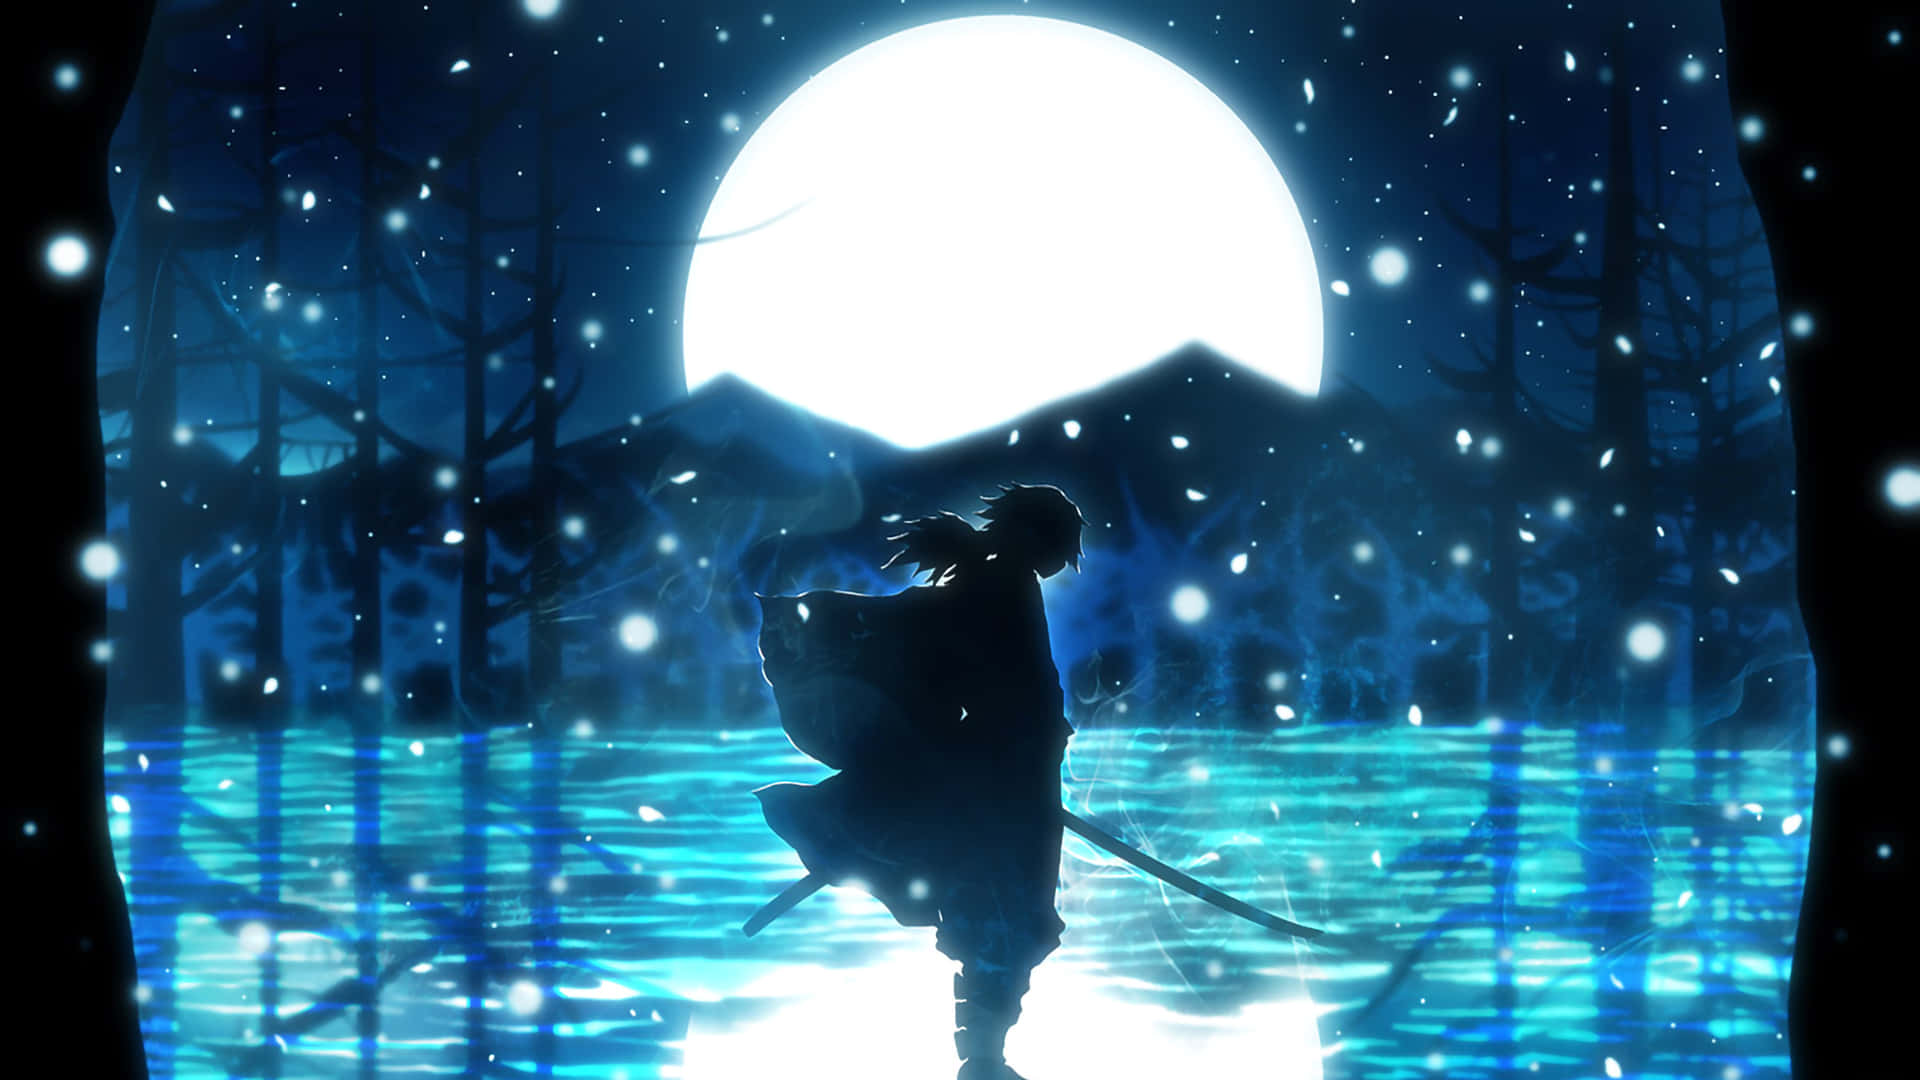 Giyutomioka Nacht Anime Landschaft. Wallpaper